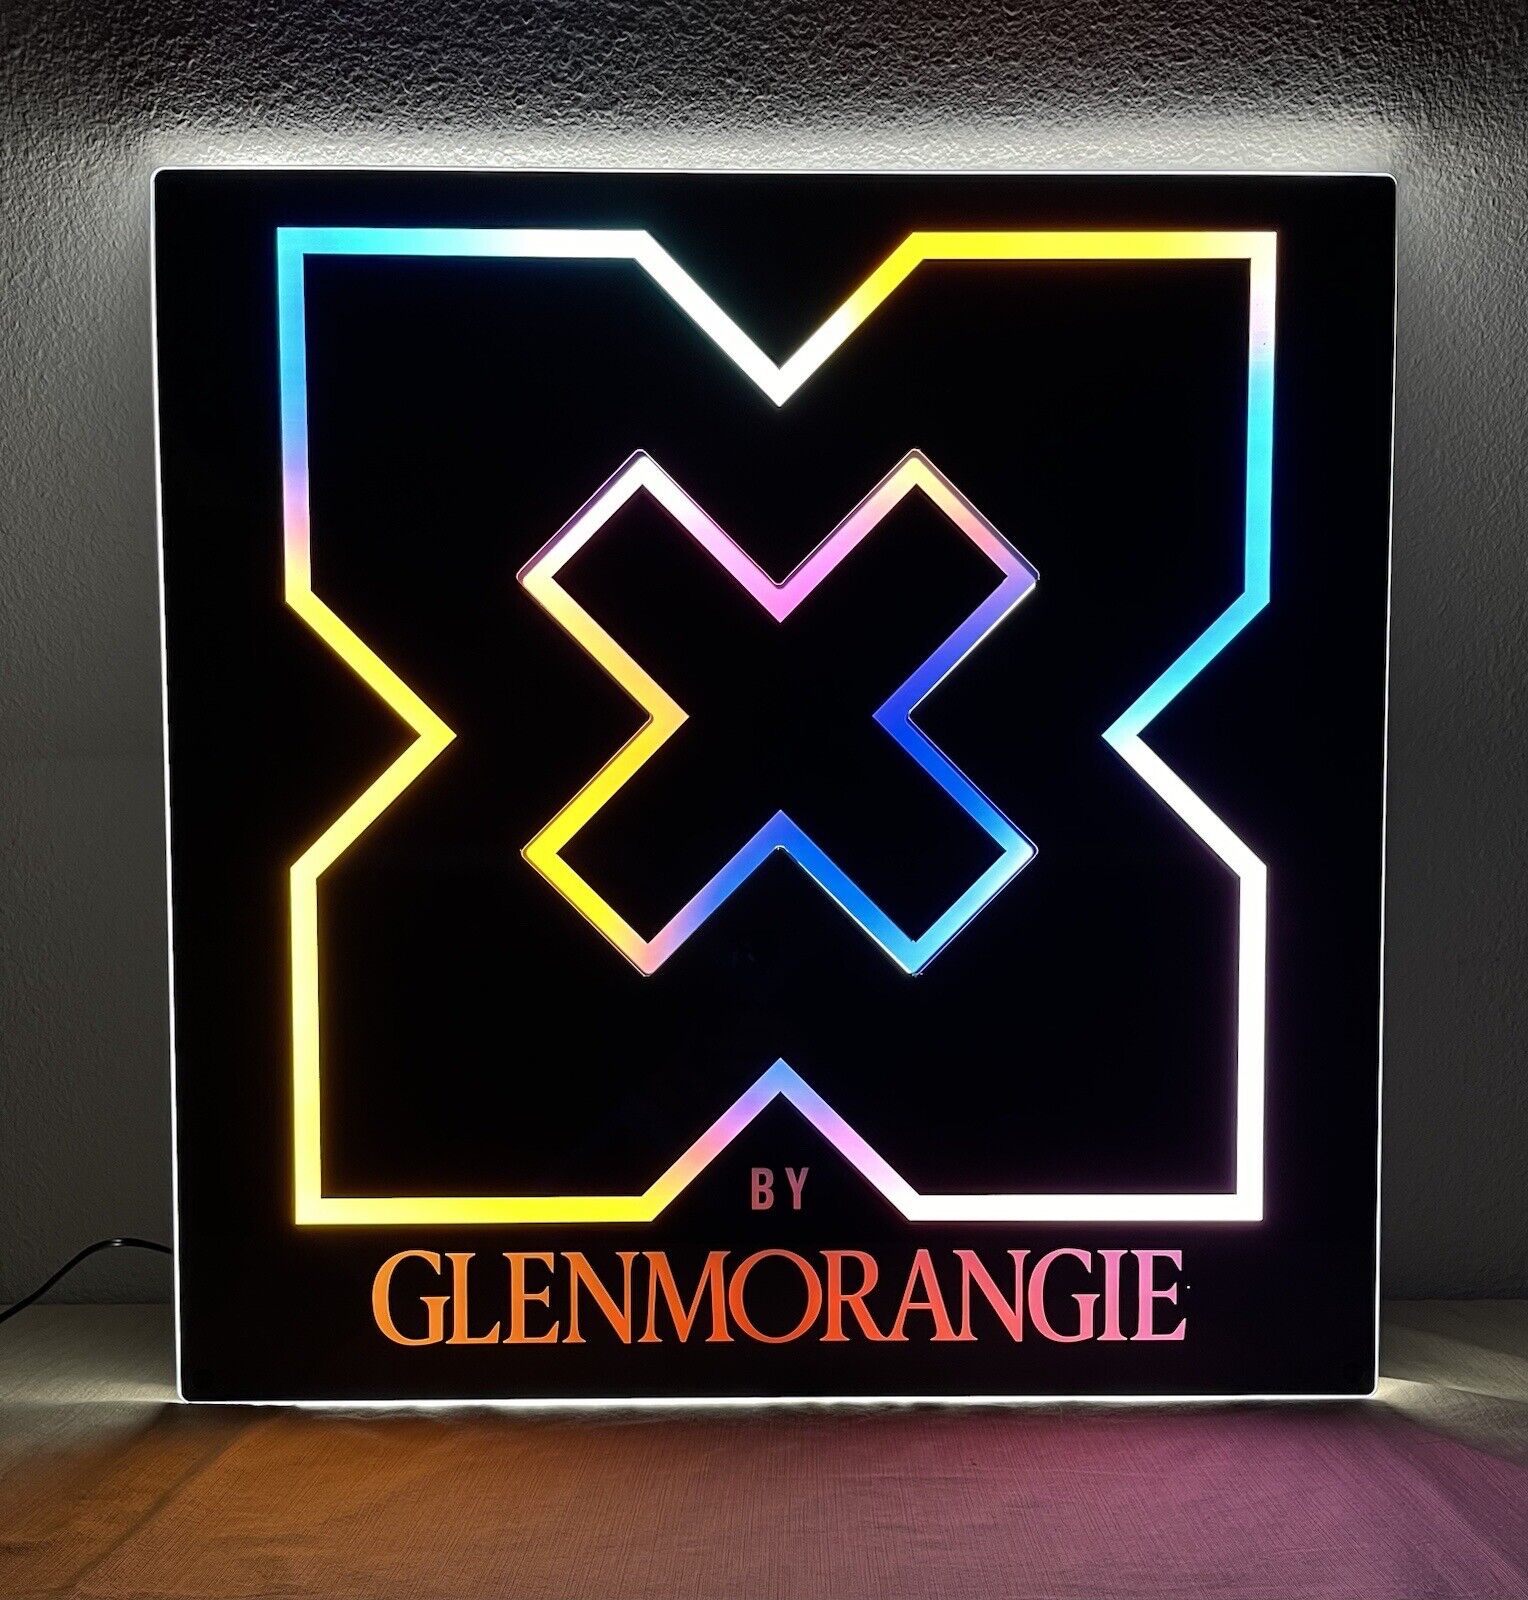 GLENMORANGIE X SCOTCH WALL HANGING LED LIT LED BAR SIGN *BRAND NEW*